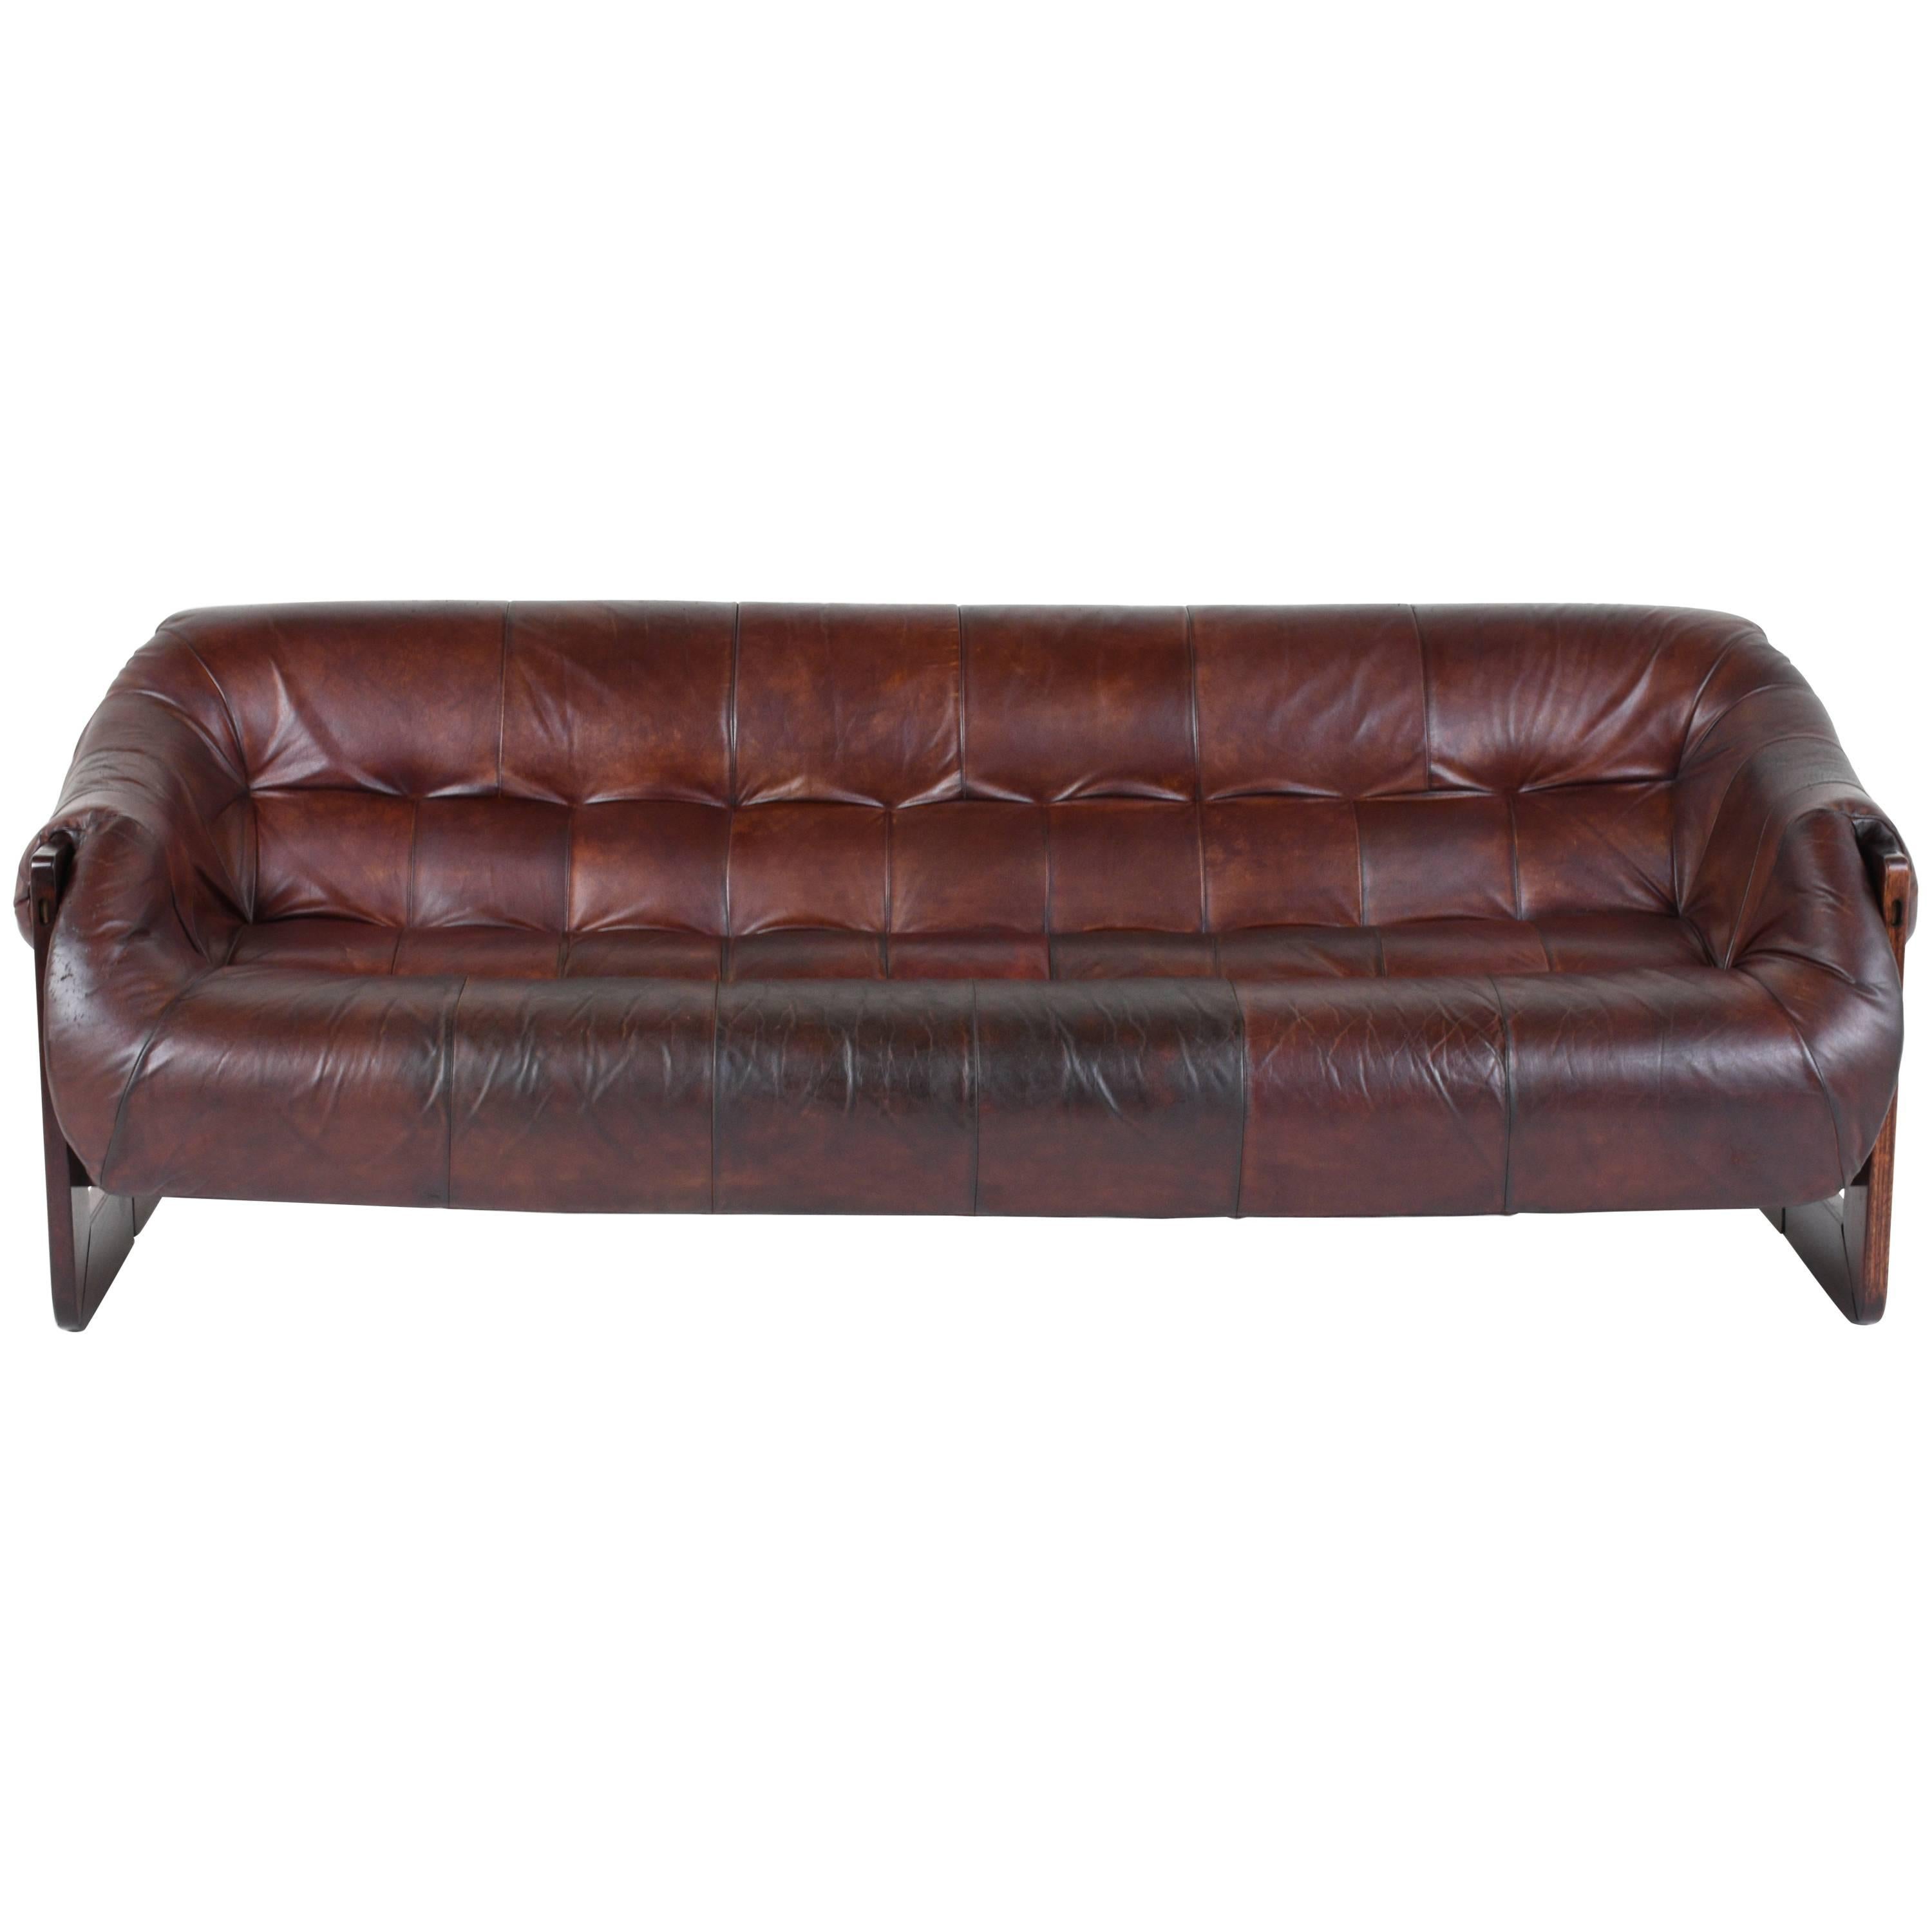 Percival Lafer Leather Sofa